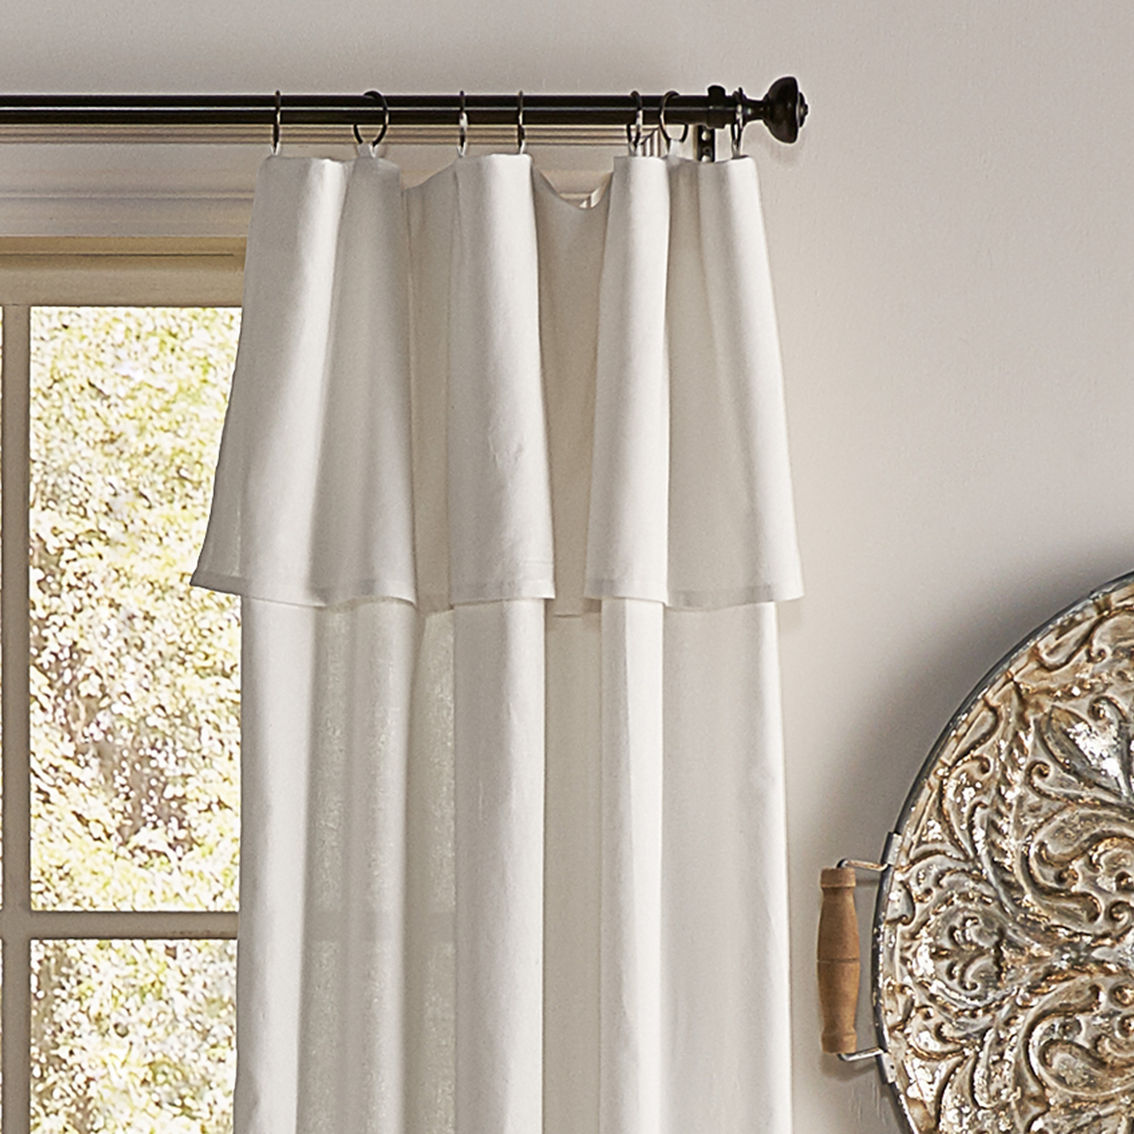 Mercantile Drop Cloth Curtain Panel - Image 3 of 5